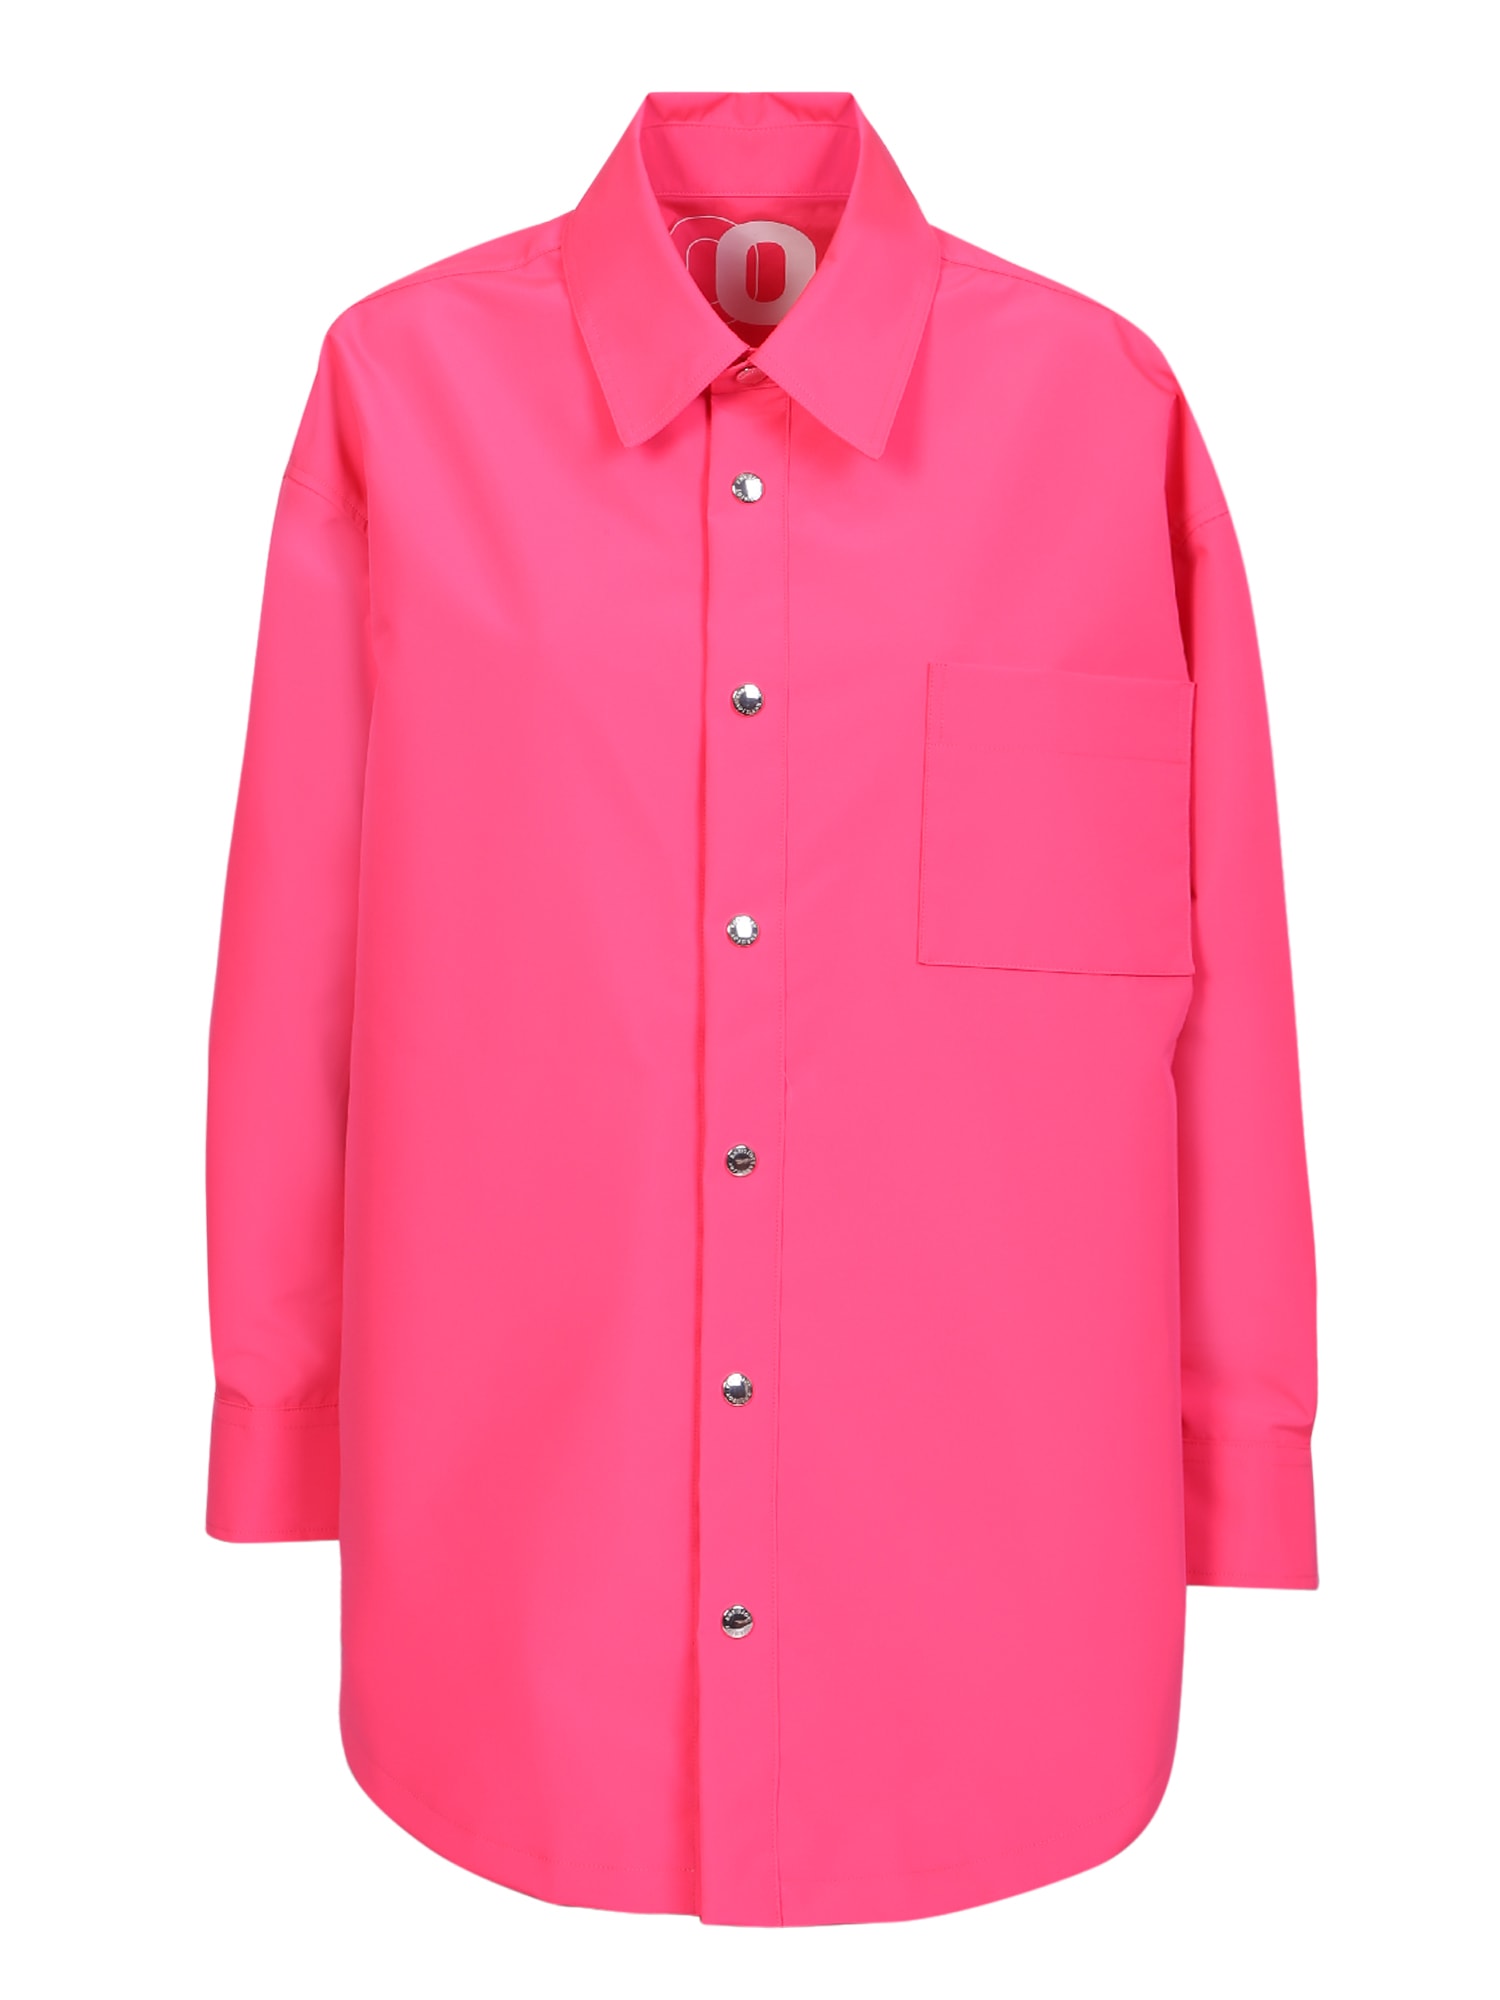 Shop Khrisjoy Oversize Shirt Flamingo Pink